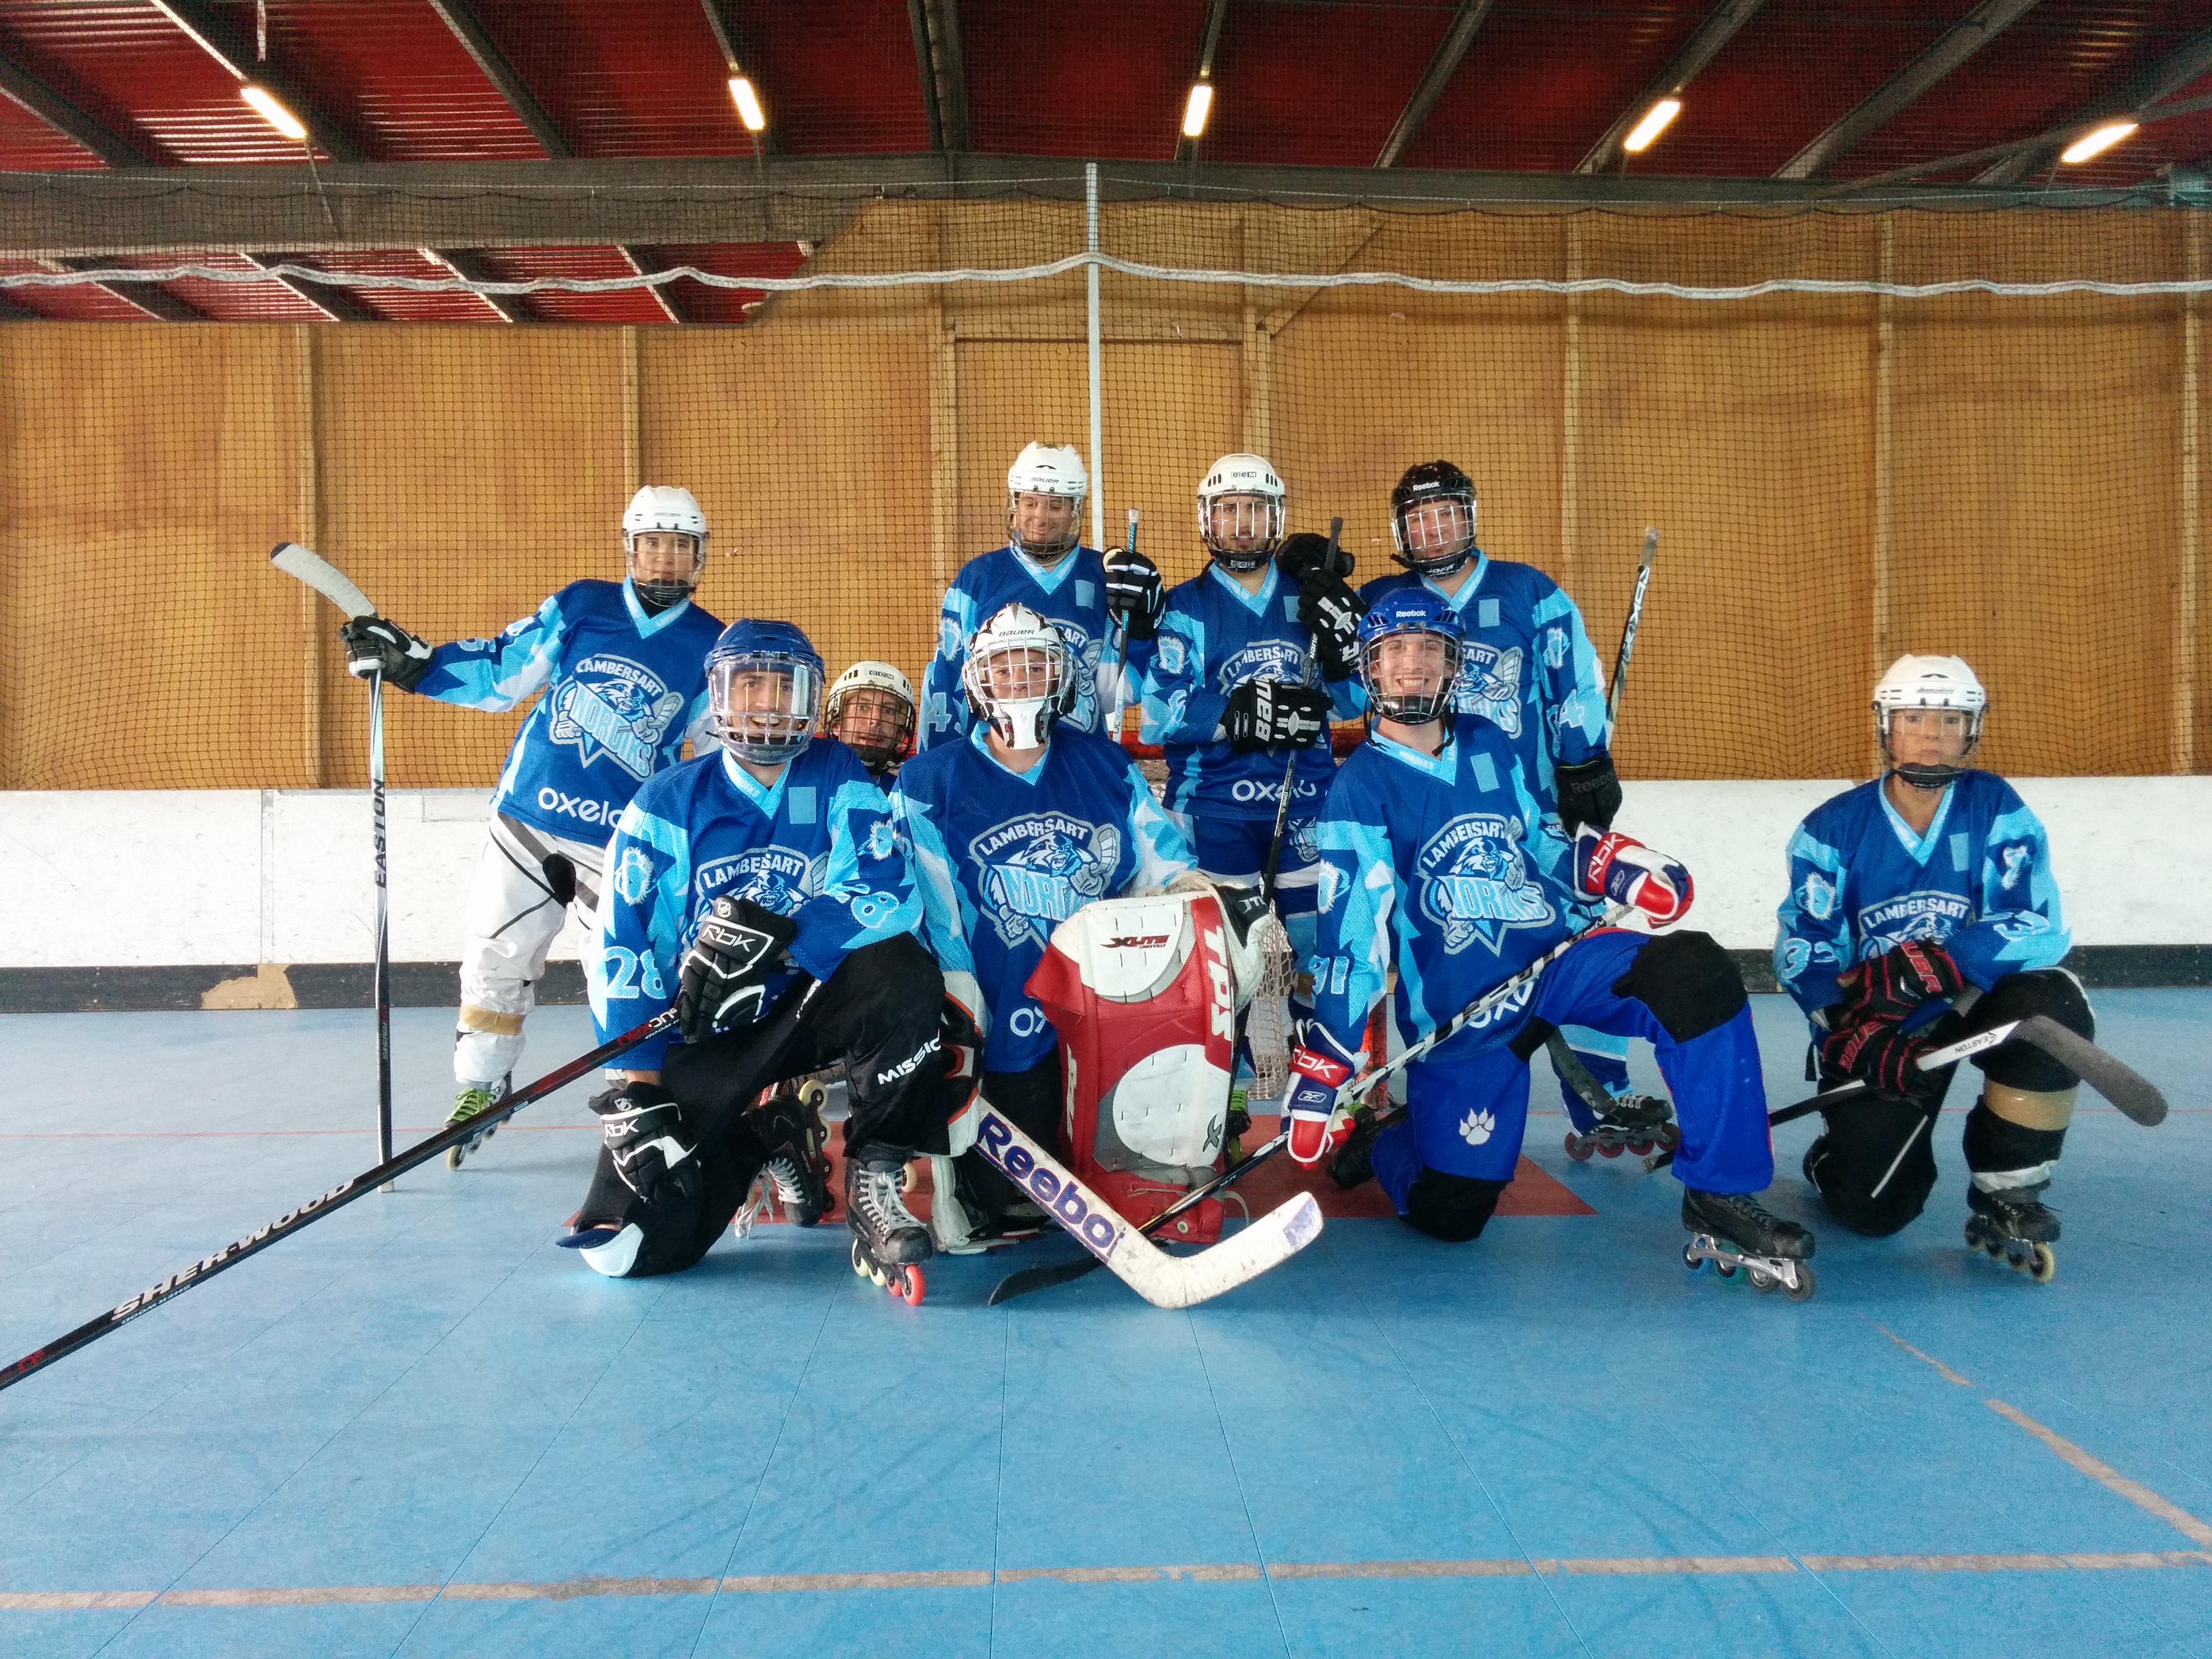 L'équipe de roller hockey des Nordiks de Lambersart